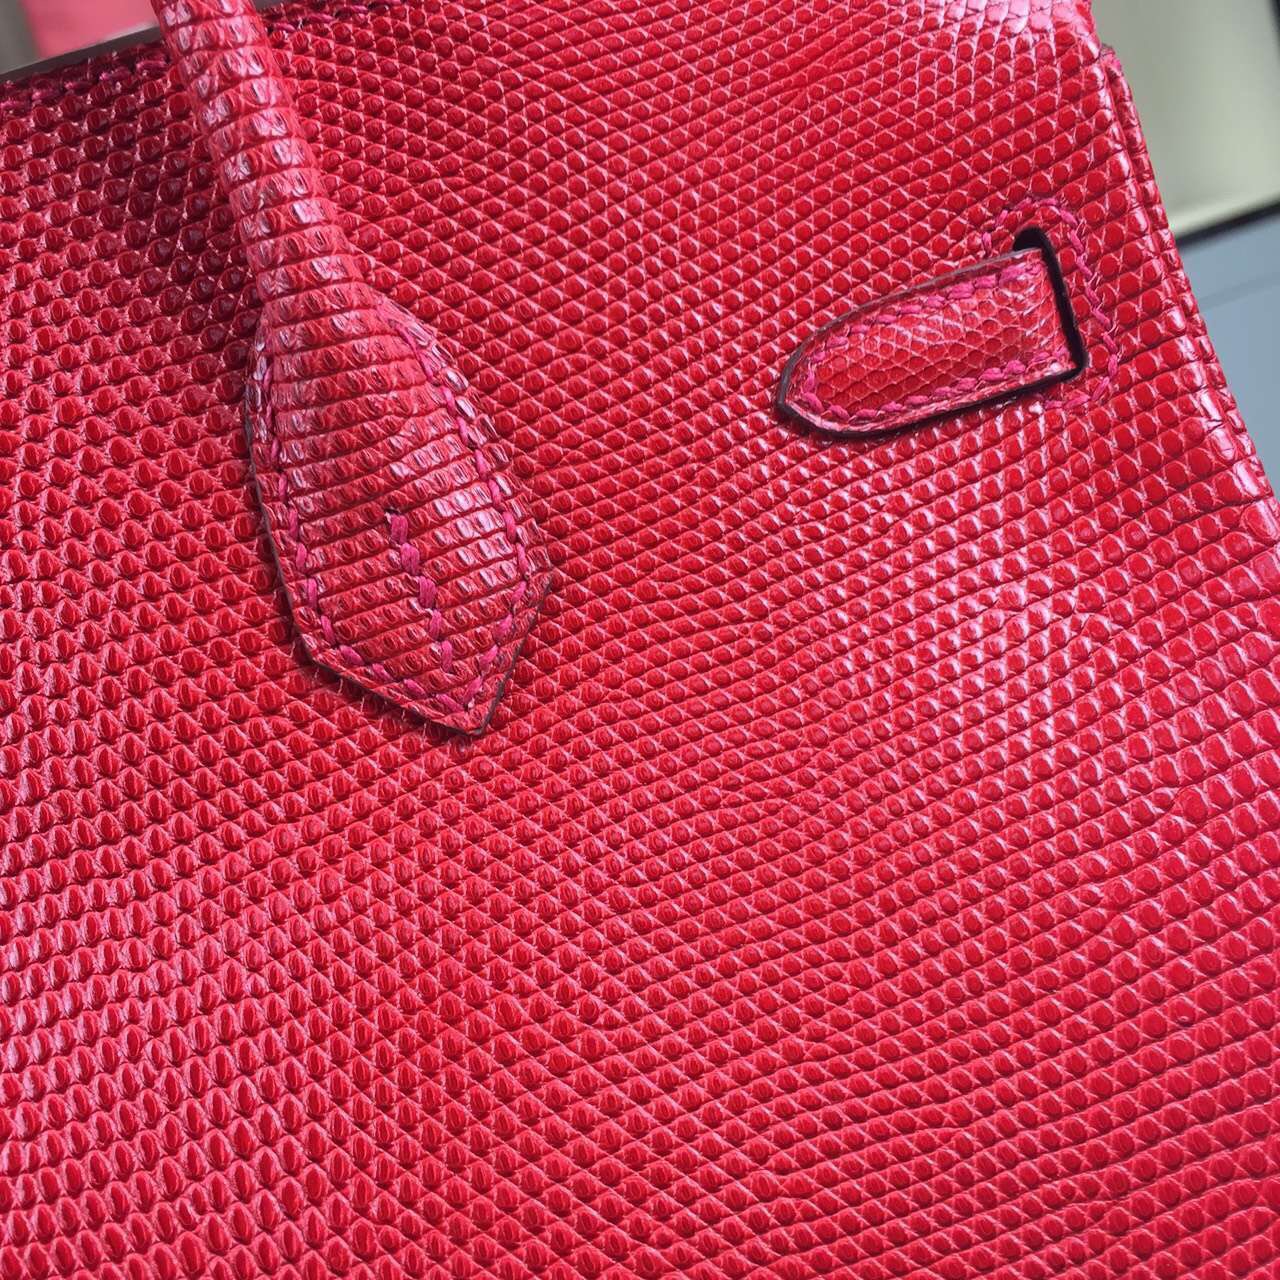 Hand Stitching Hermes Birkin Bag25cm Red HCP Lizard Skin Leather Women&#8217;s Tote Bag